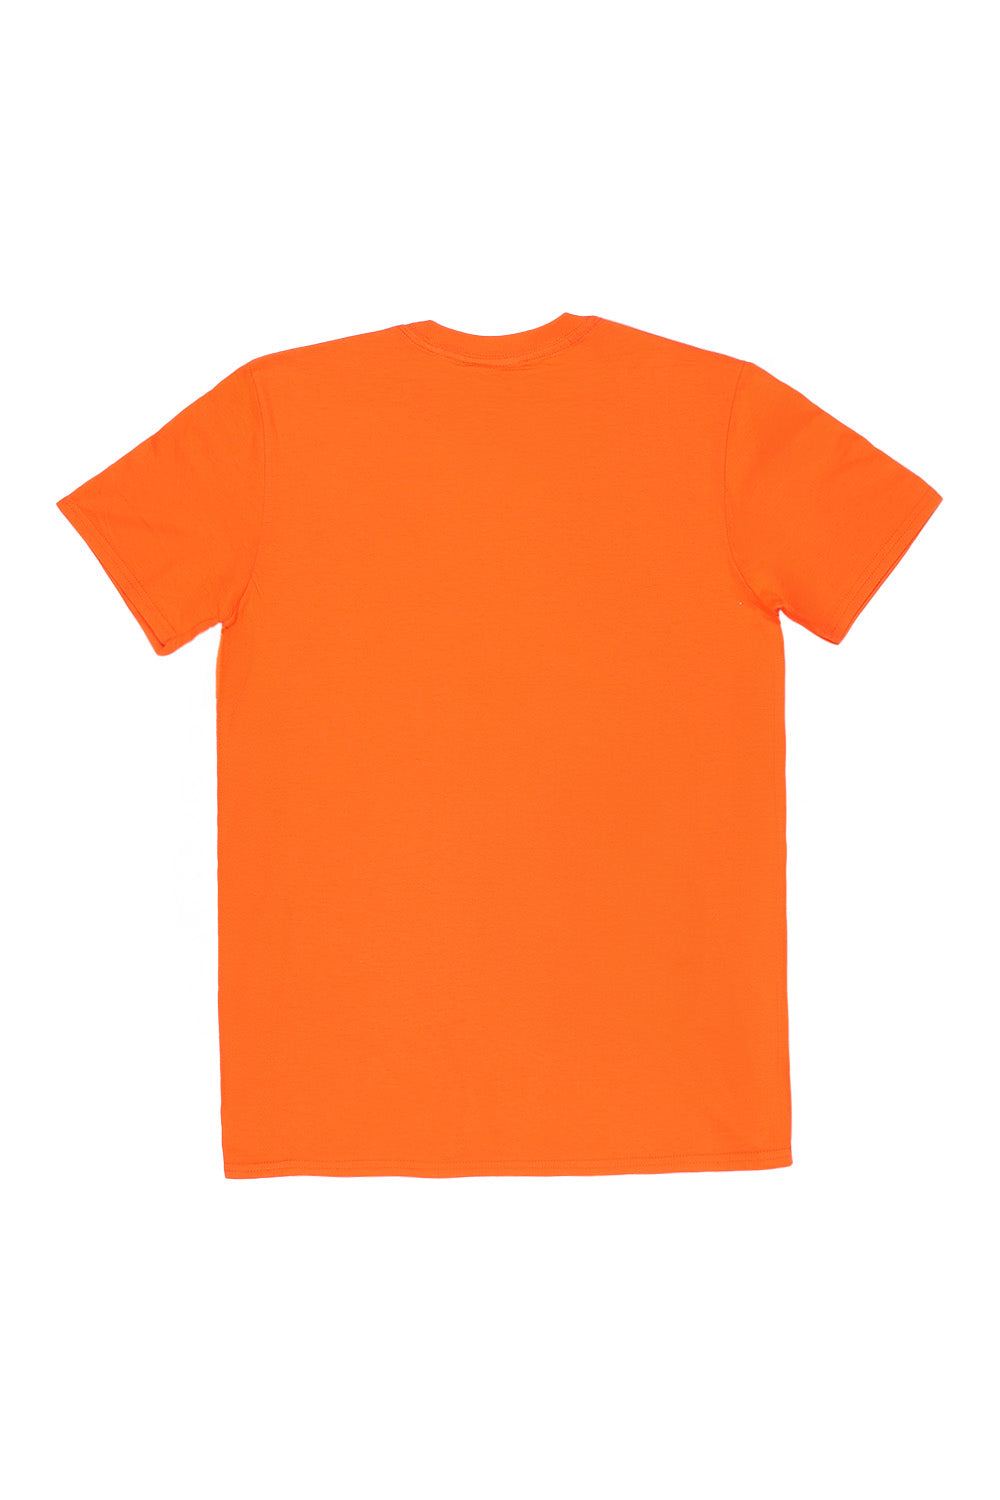 Illinois T-Shirt in Orange (Custom Packs)